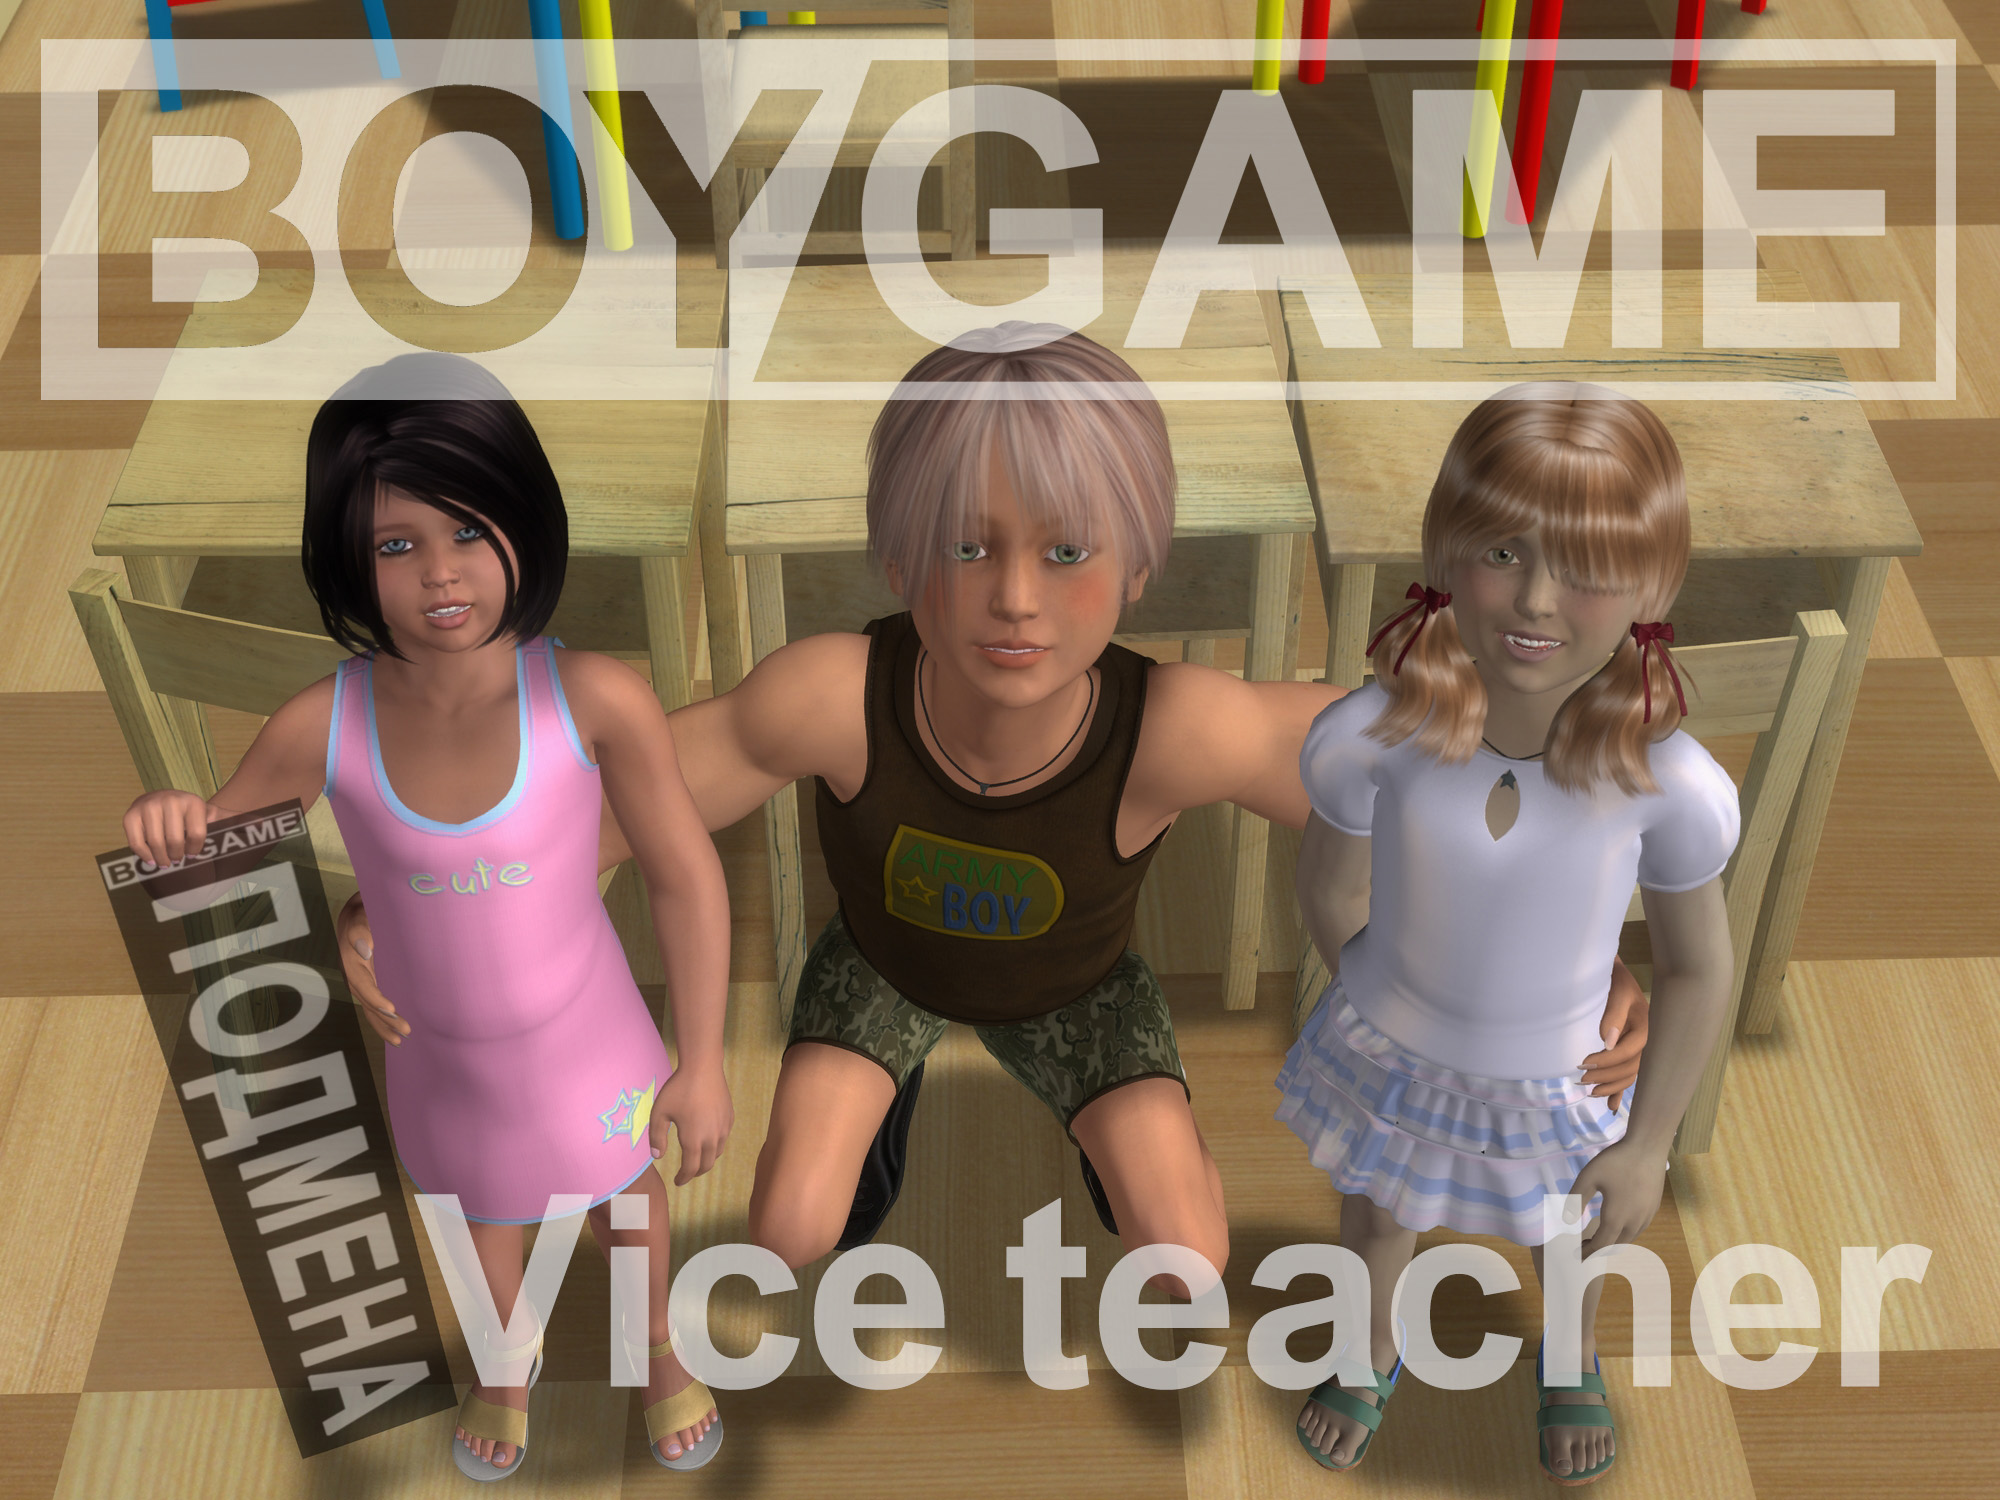 [Boygame] Vice teacher